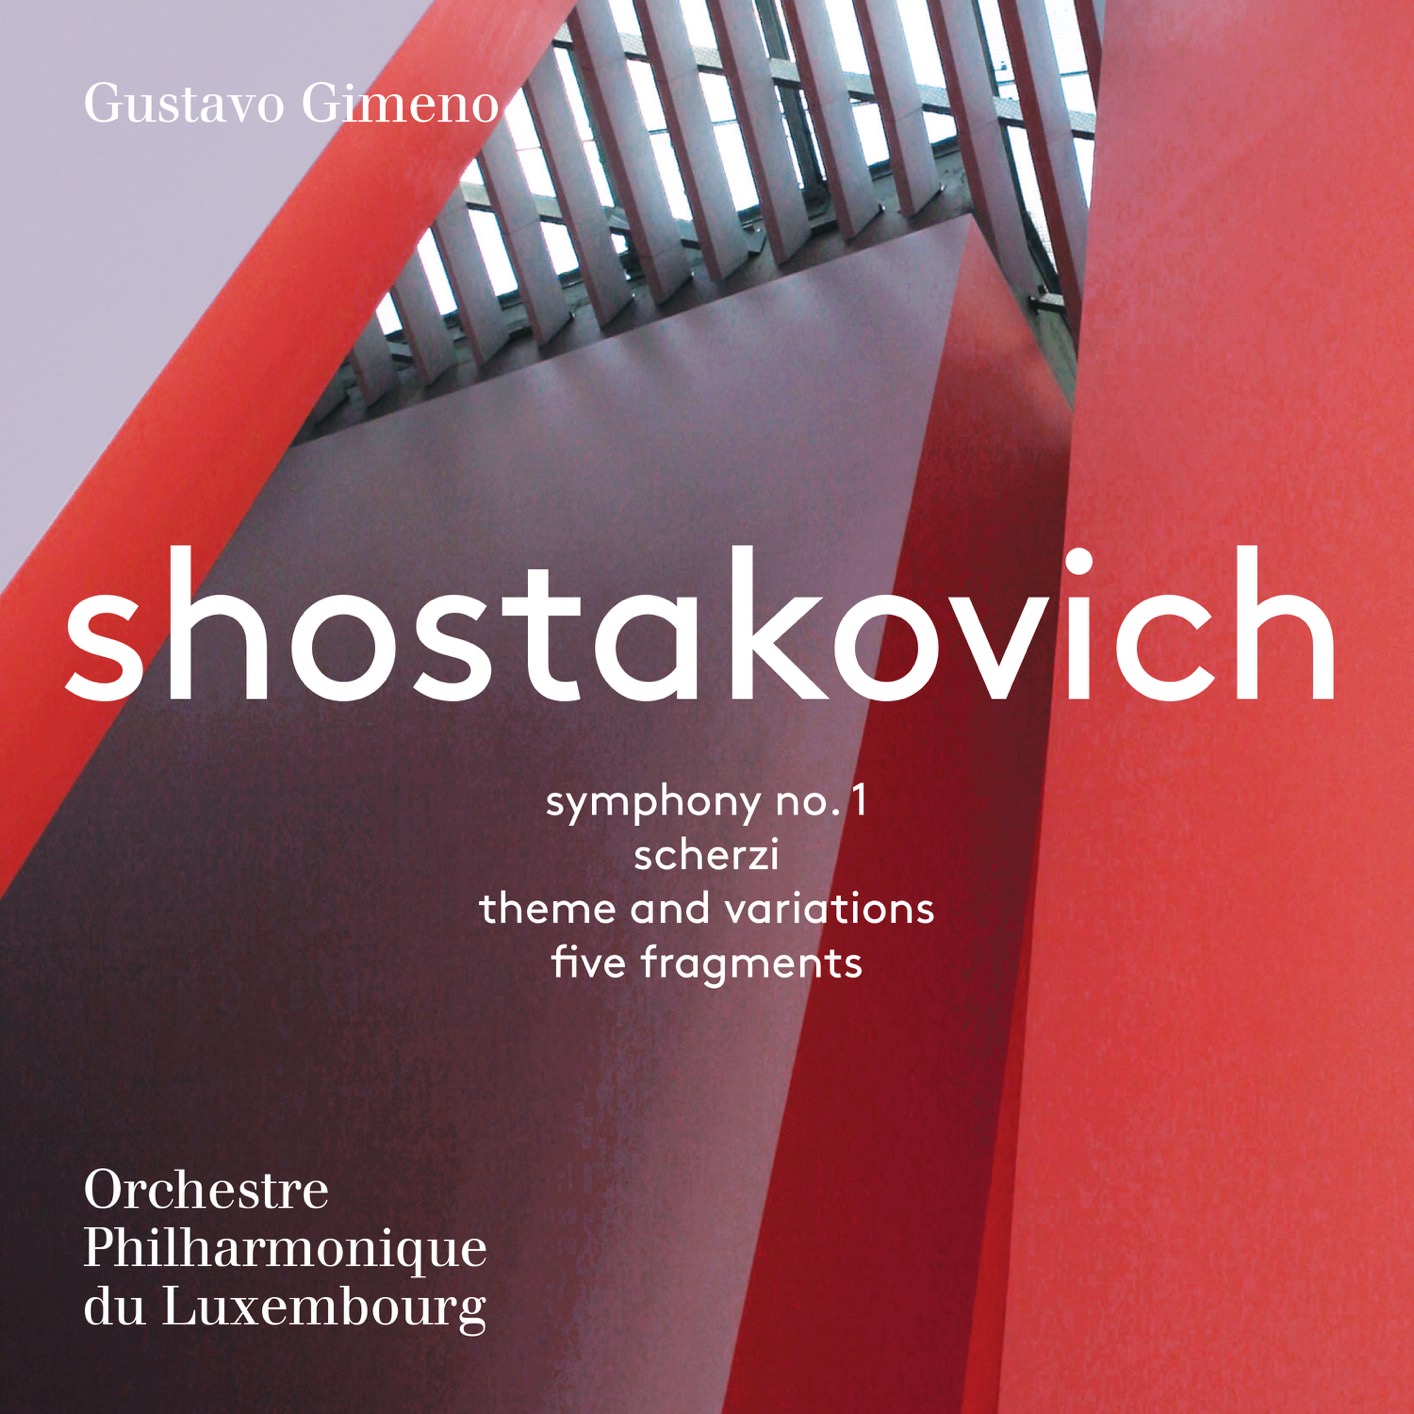 Orchestre Philharmonique du Luxembourg, Gustavo Gimeno – Shostakovich: Symphony No. 1, Scherzi, Theme and Variations & 5 Fragments (2012) [HighResAudio DSF DSD64/2.82MHz]